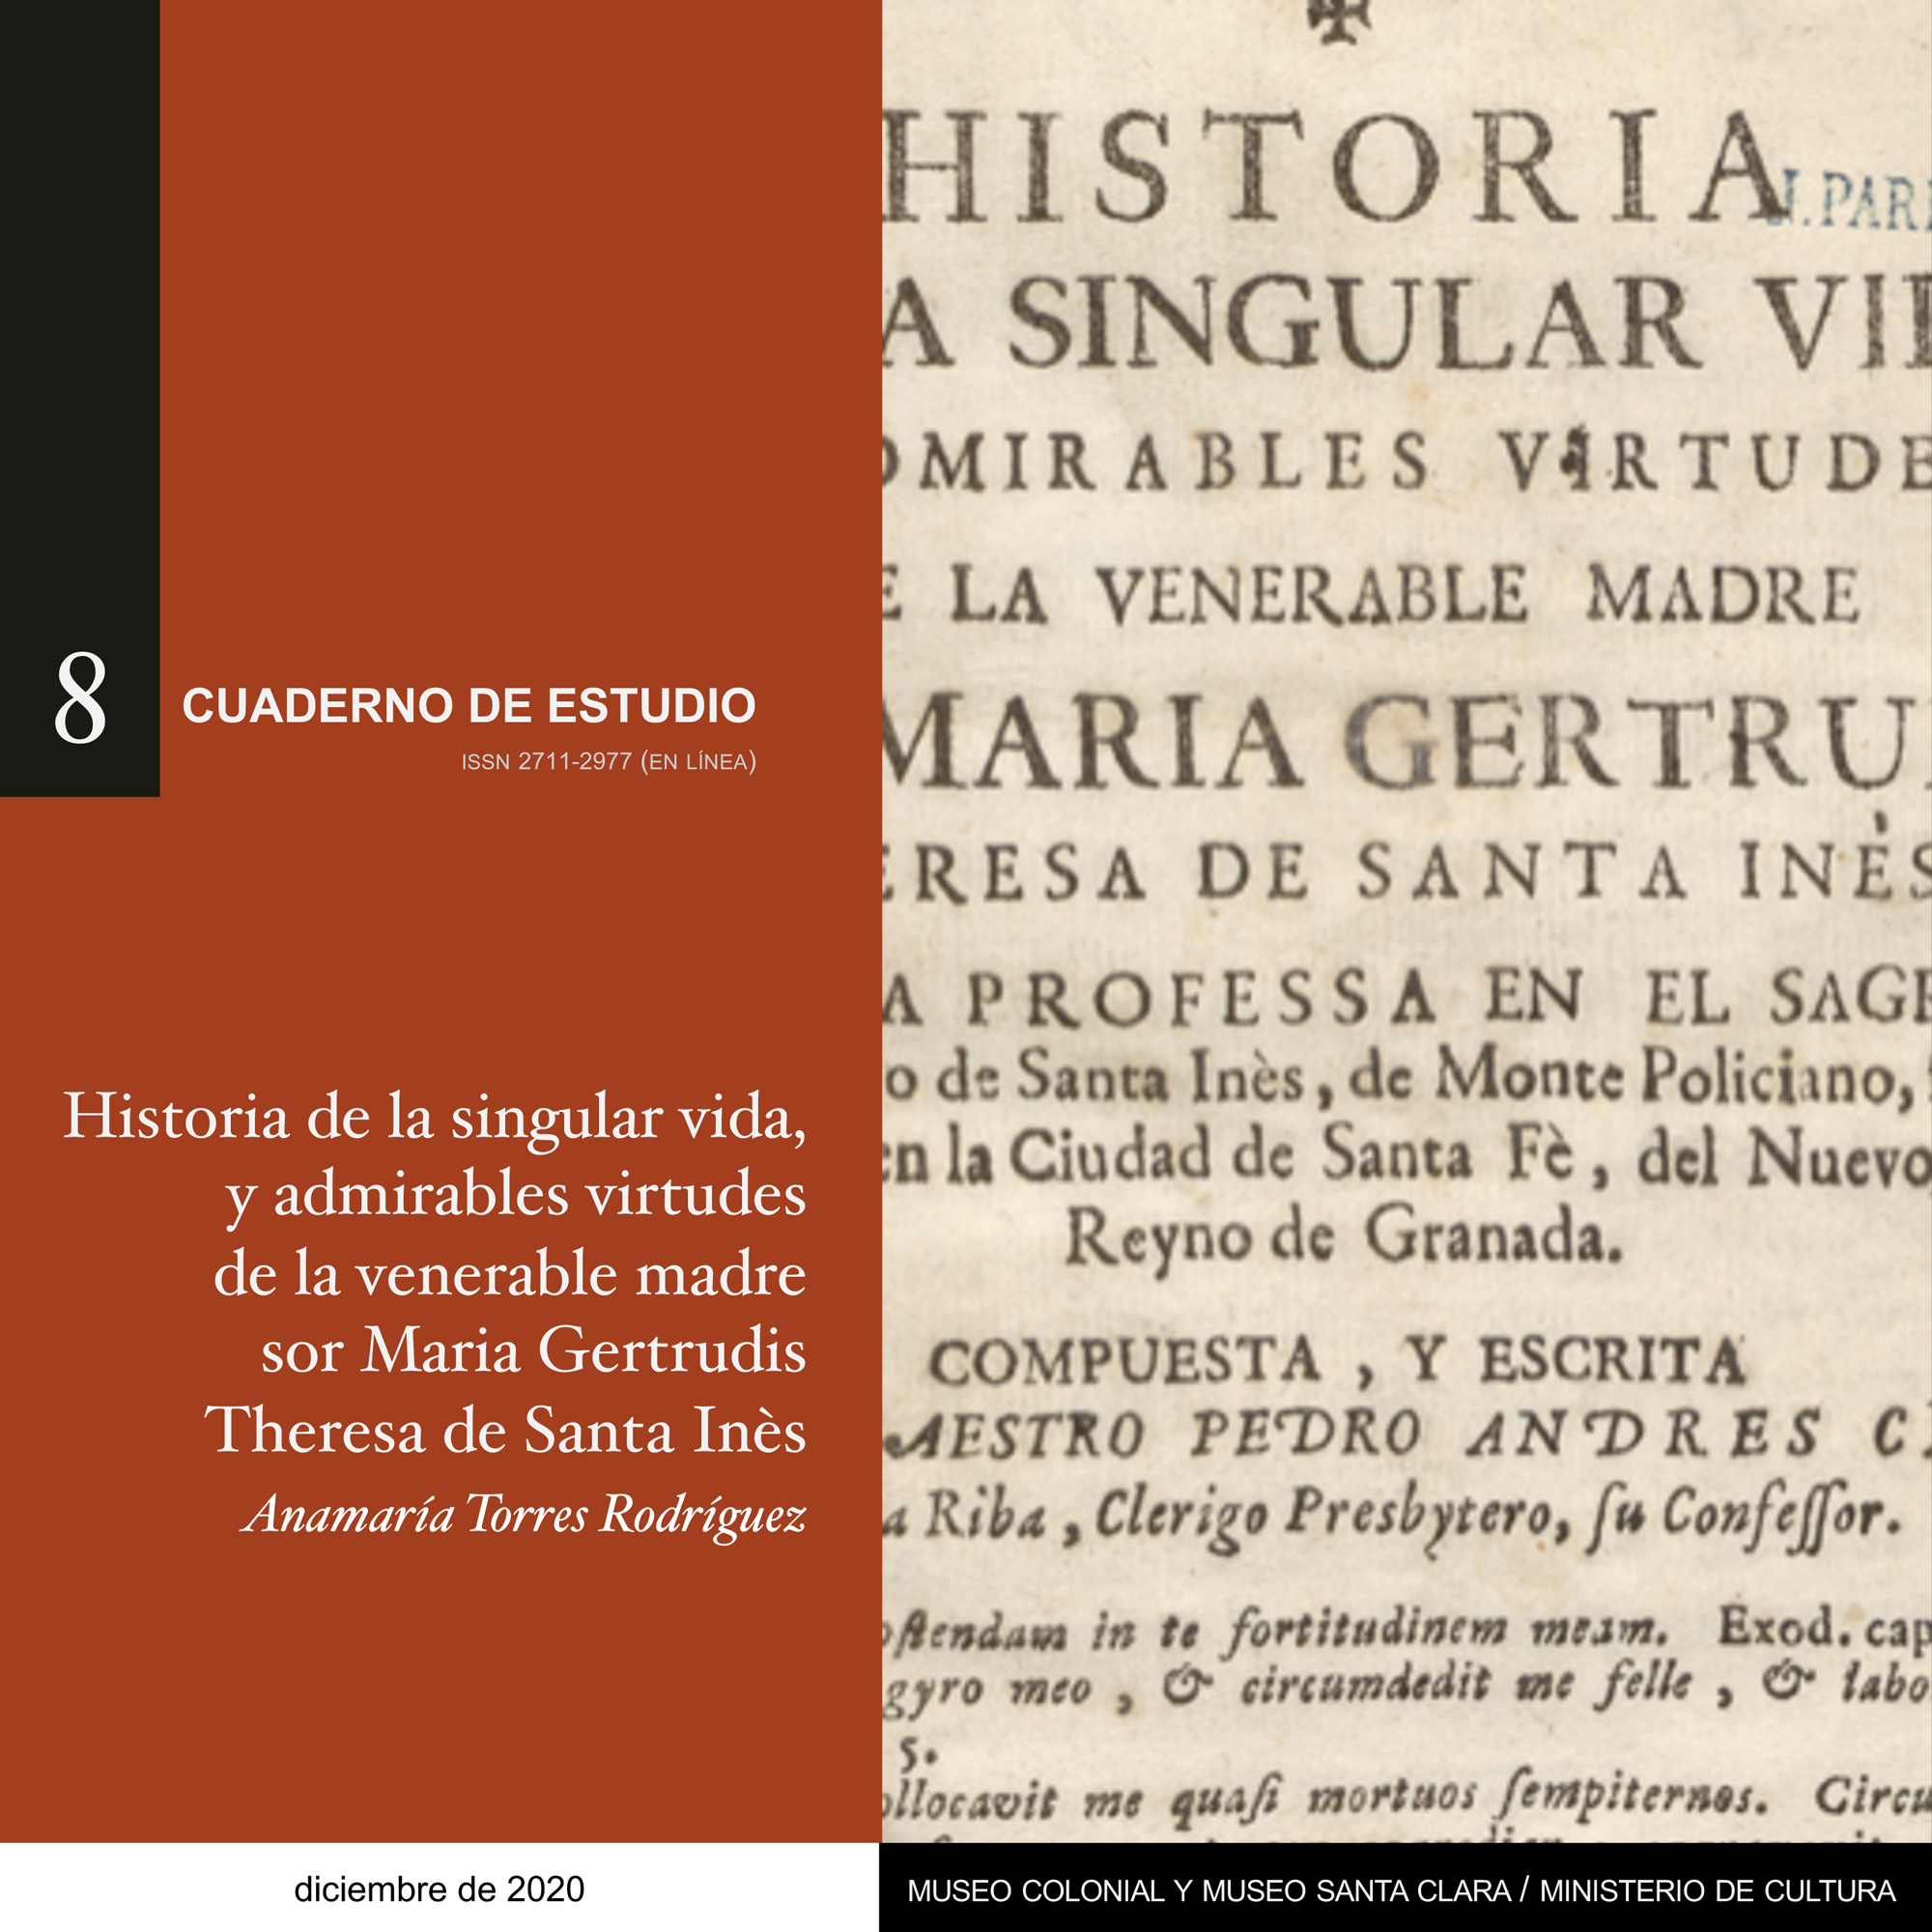 Historia de la singular vida sor Maria Gertrudis Theresa de Santa Inés - Cuaderno de estudio No. 8